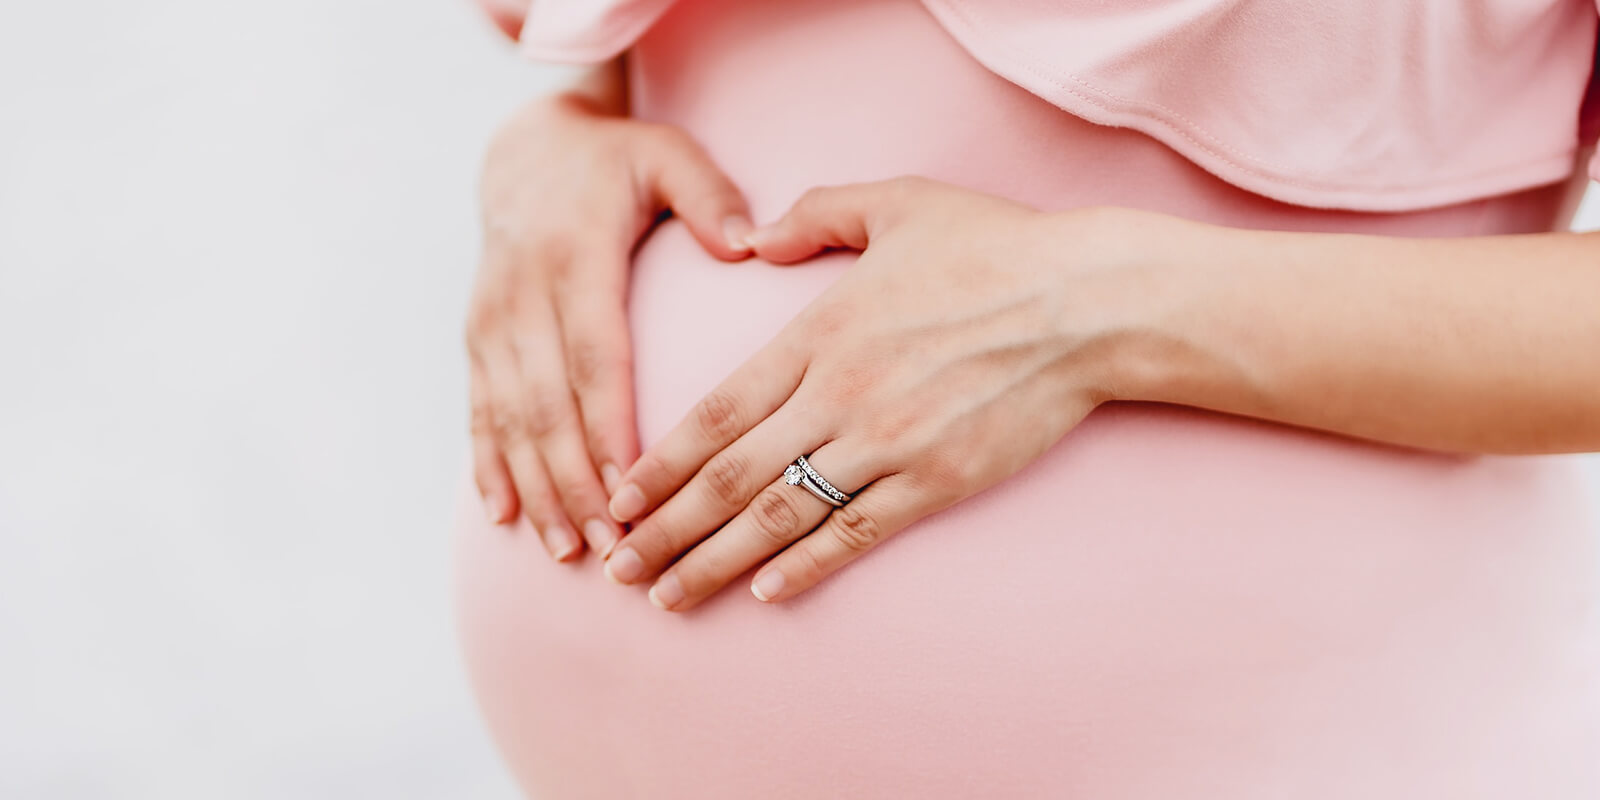 myo inositol for women pregnancy health